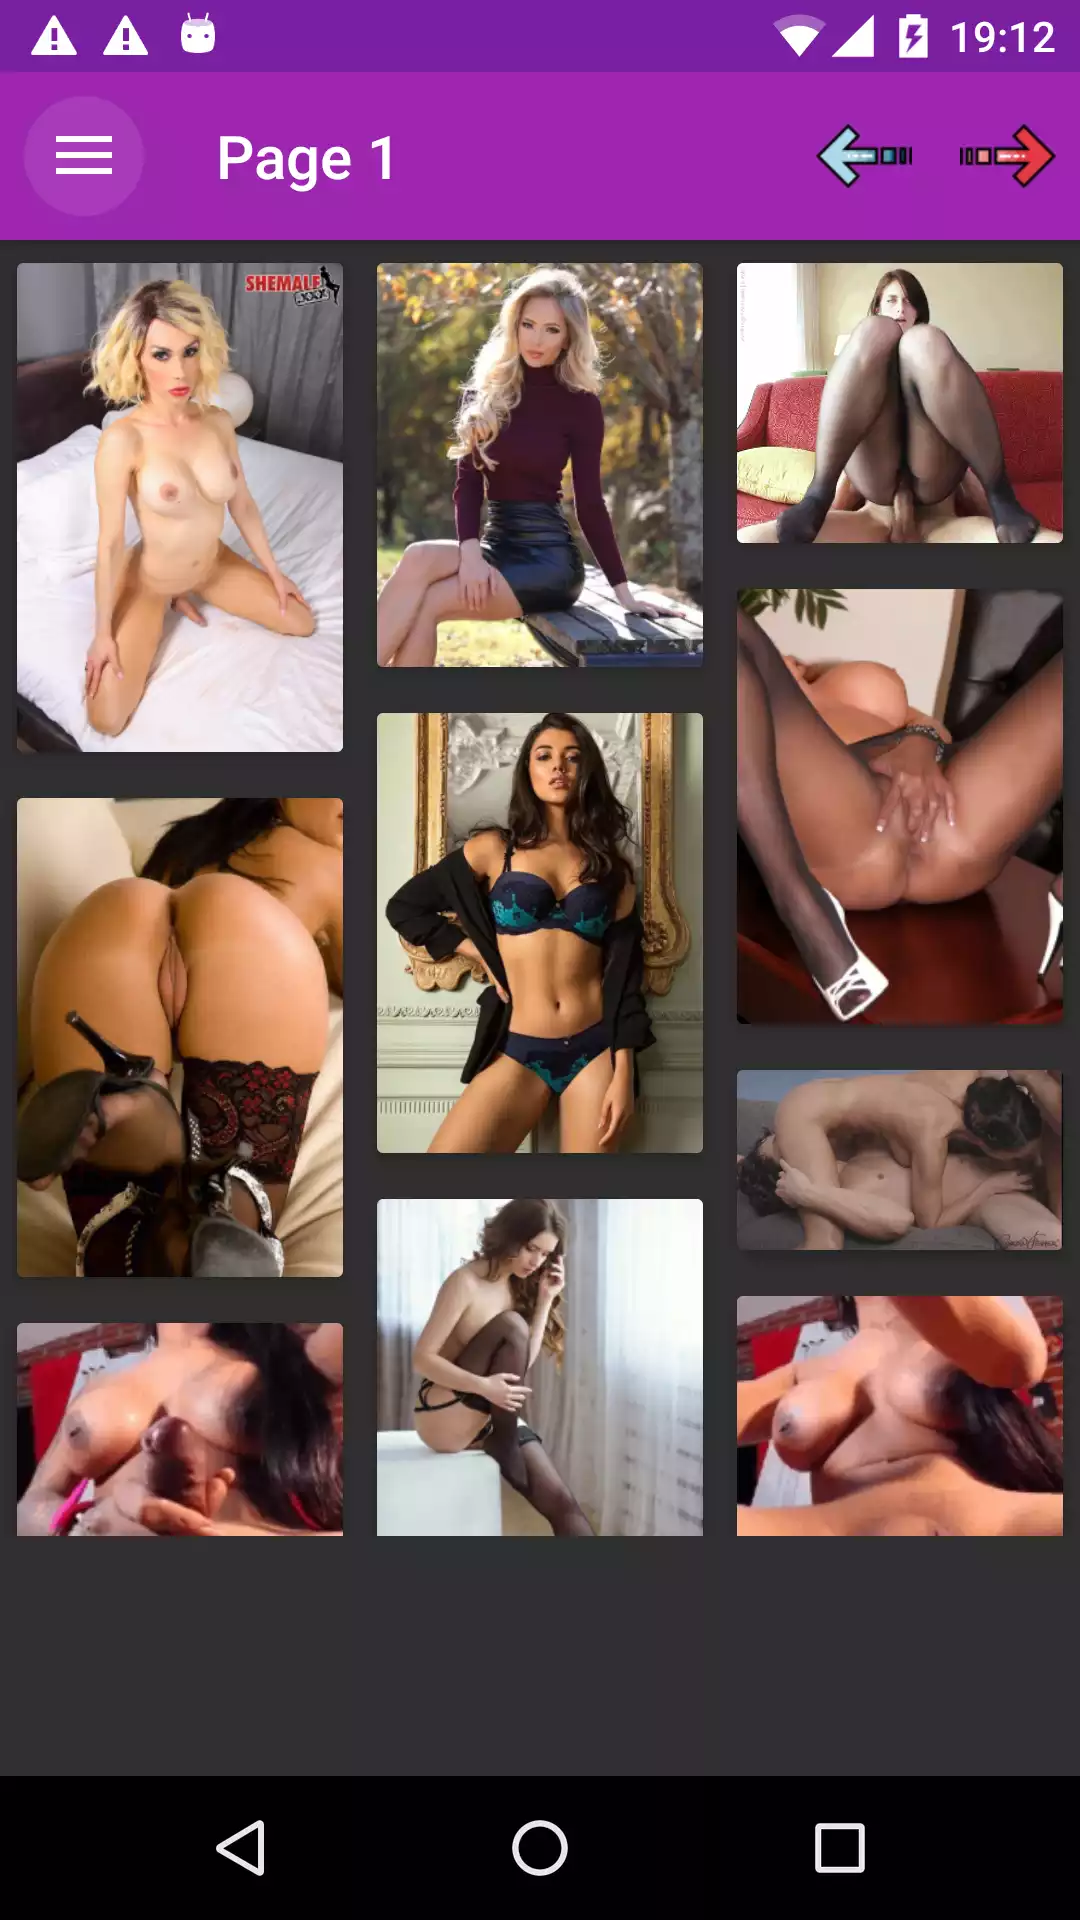 Sexy Group Sex Pics android,comics,stars,hentai,futanari,good,pics,hentay,porn,pornstar,apps,app,adult,galleries,sexy,ebony,download,apk,hot,image,pictures,photos